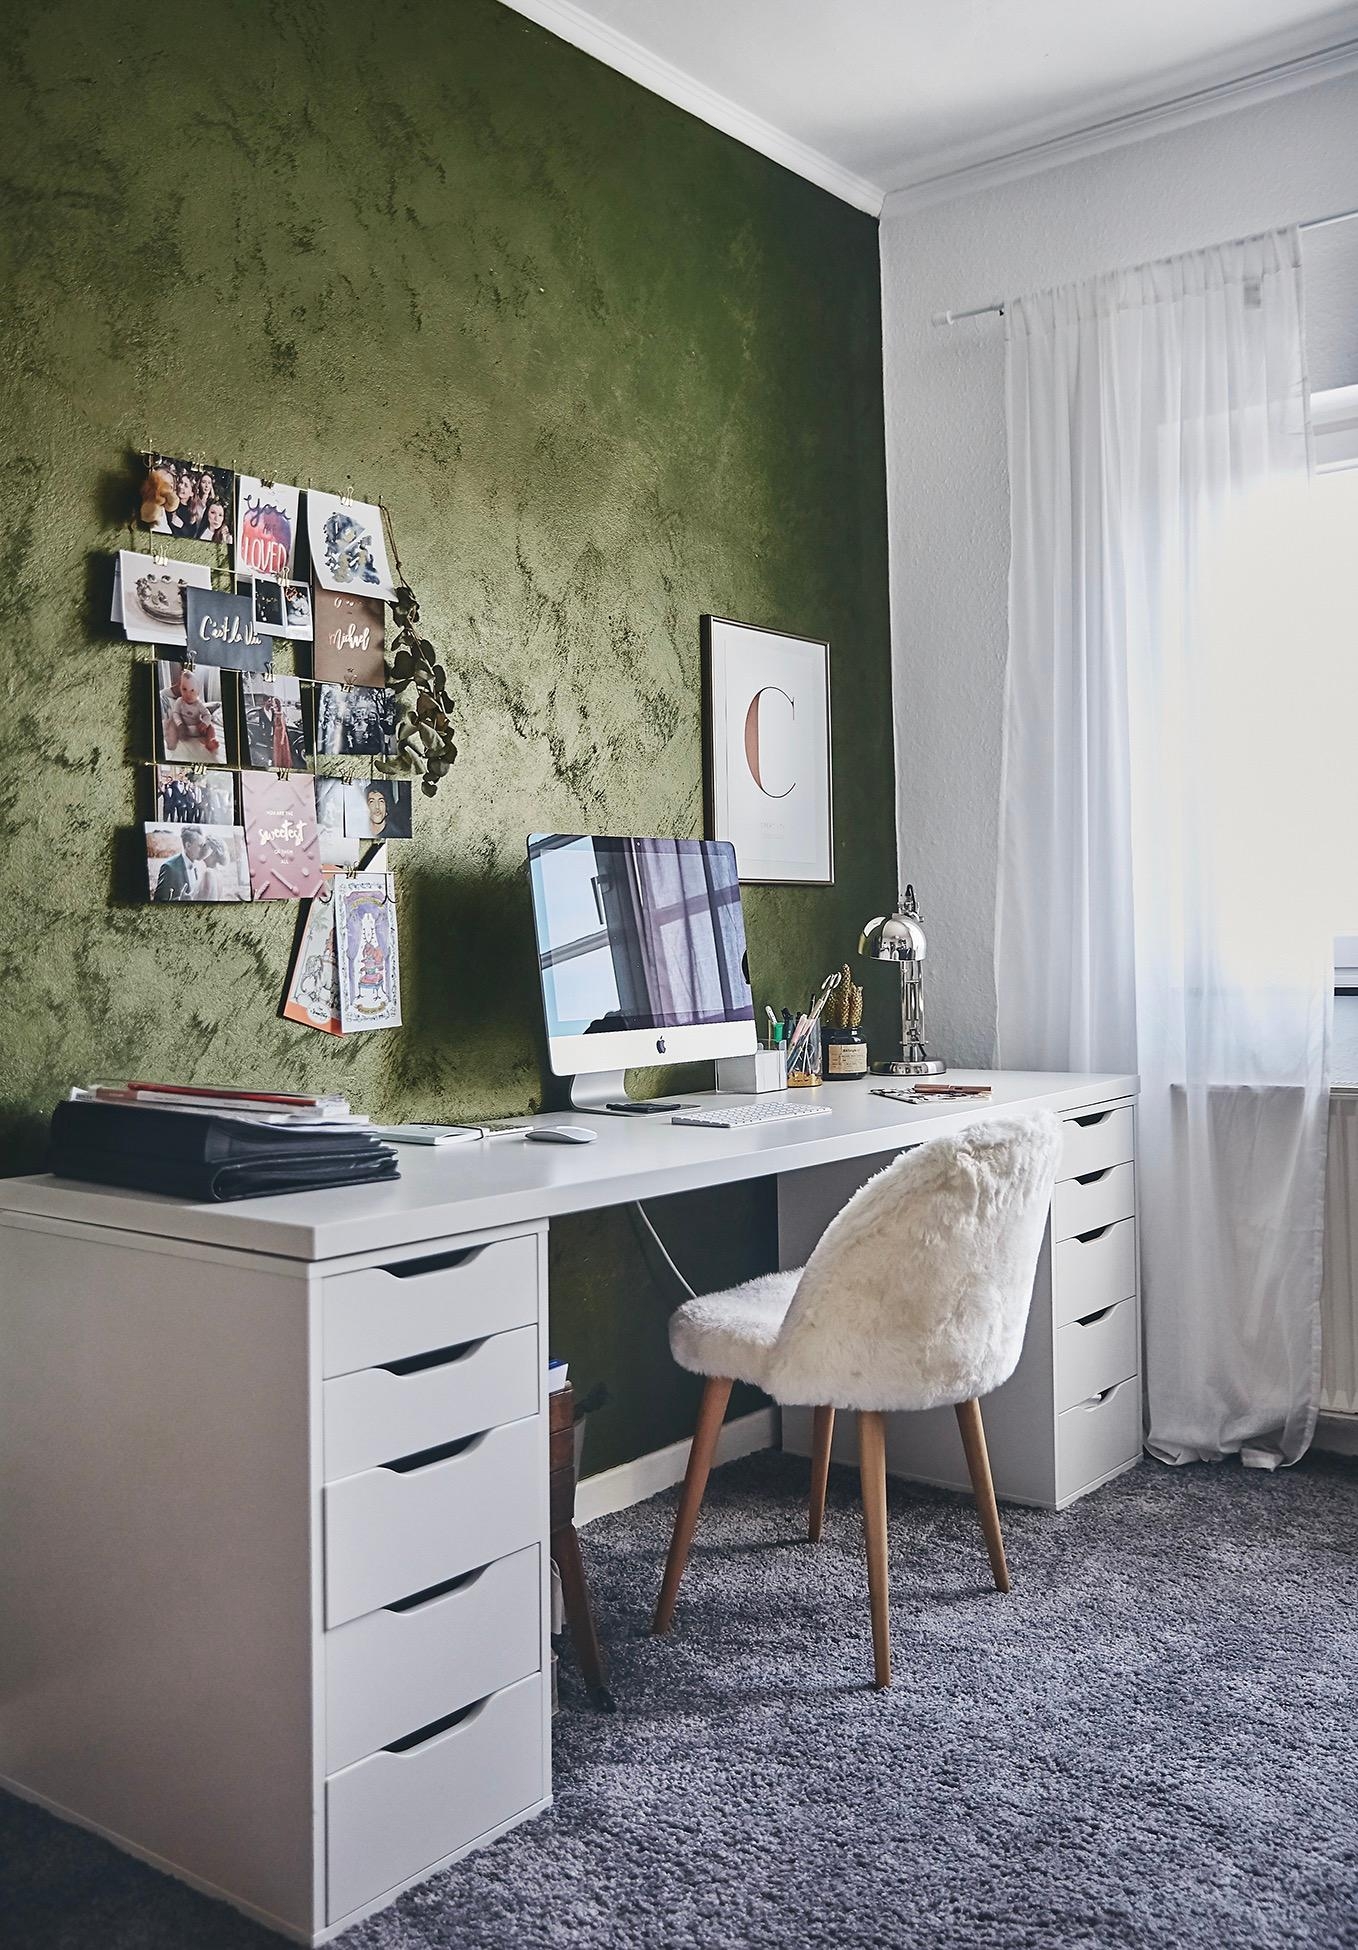 My little green office 🍀💚 #myfavoriteplace #placetobe
Foto: Keno Topilin